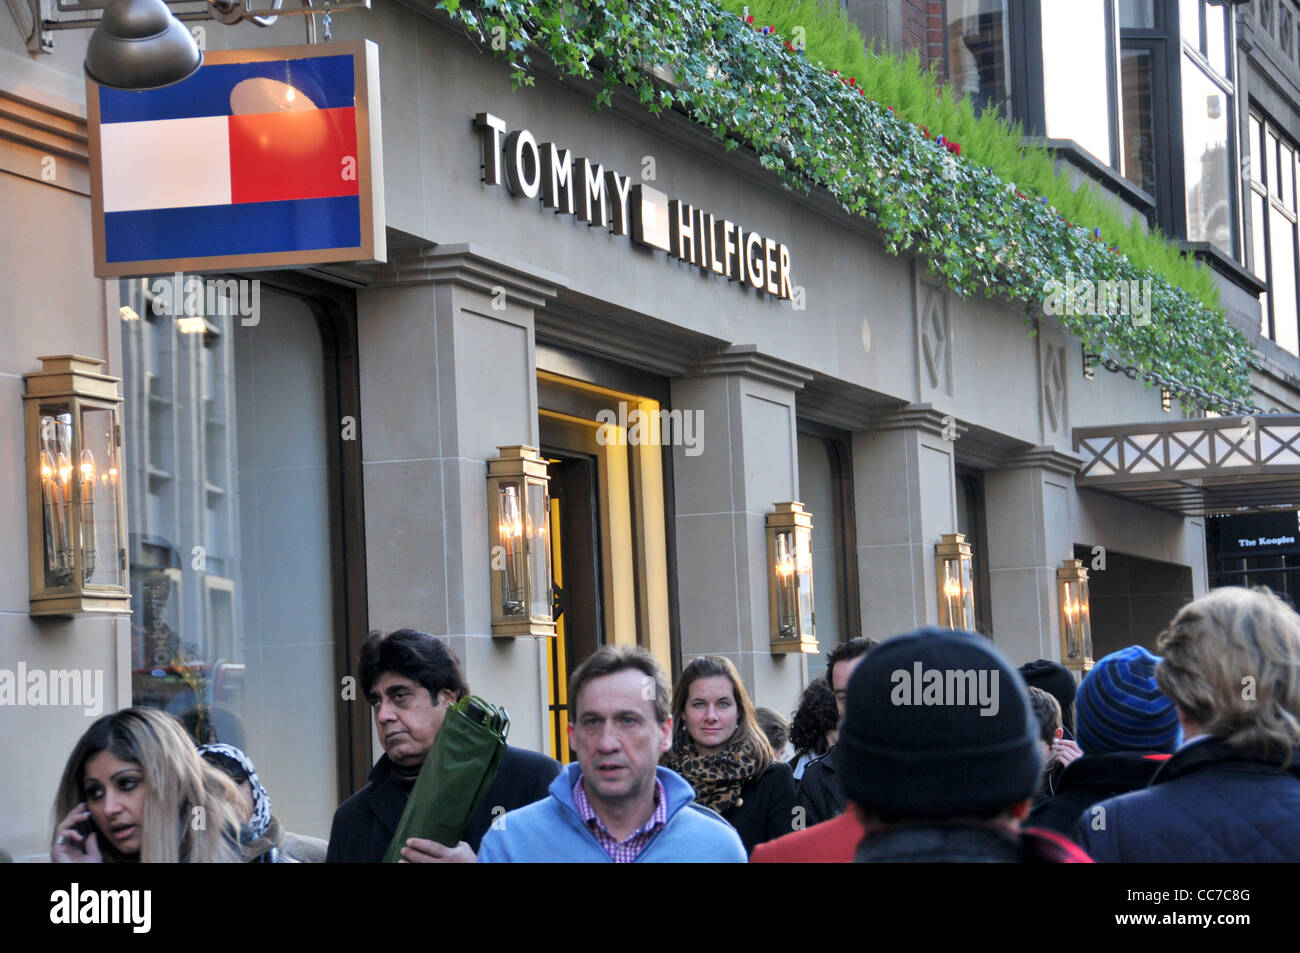 Boutique Tommy Hilfiger London Knightsbridge Photo Stock - Alamy